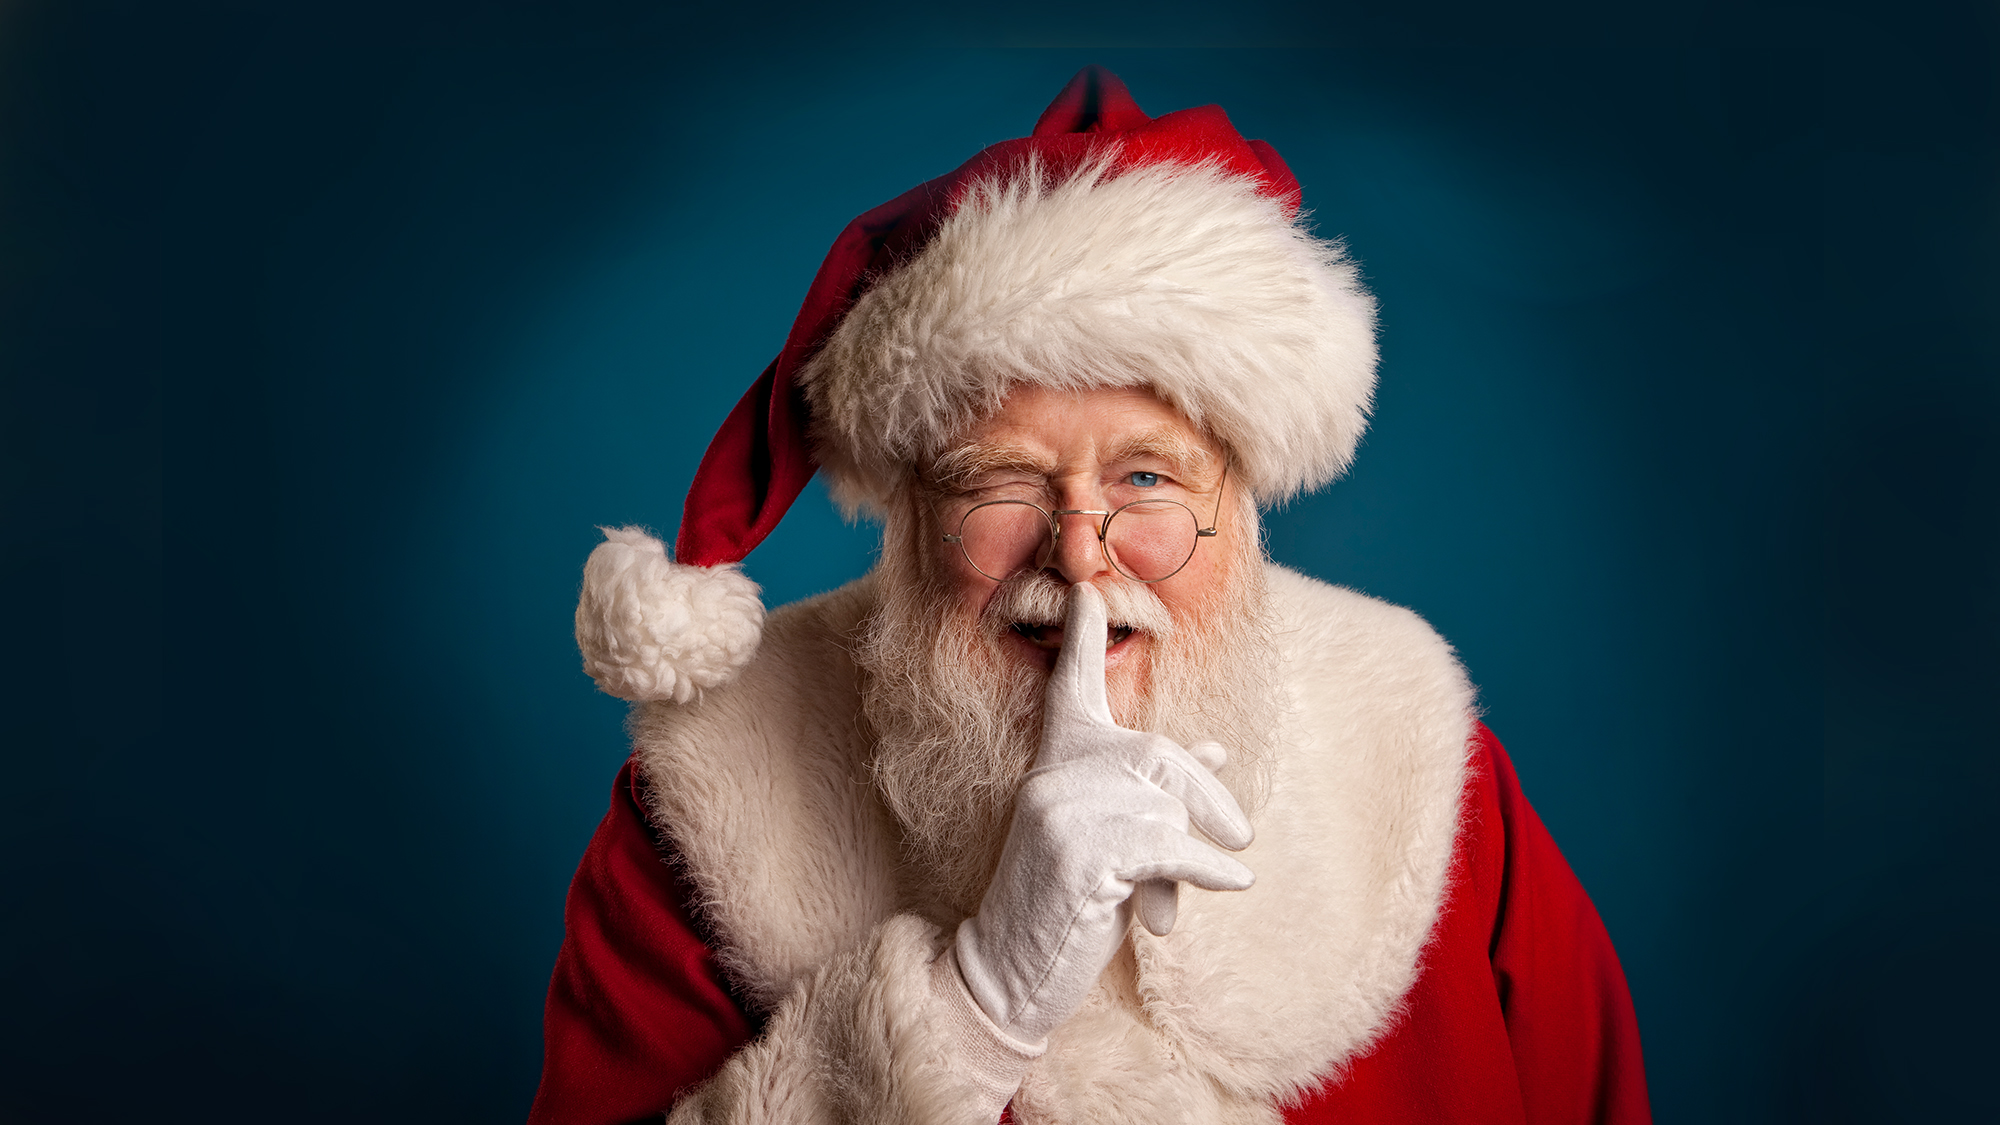 Leadership Lessons from Santa